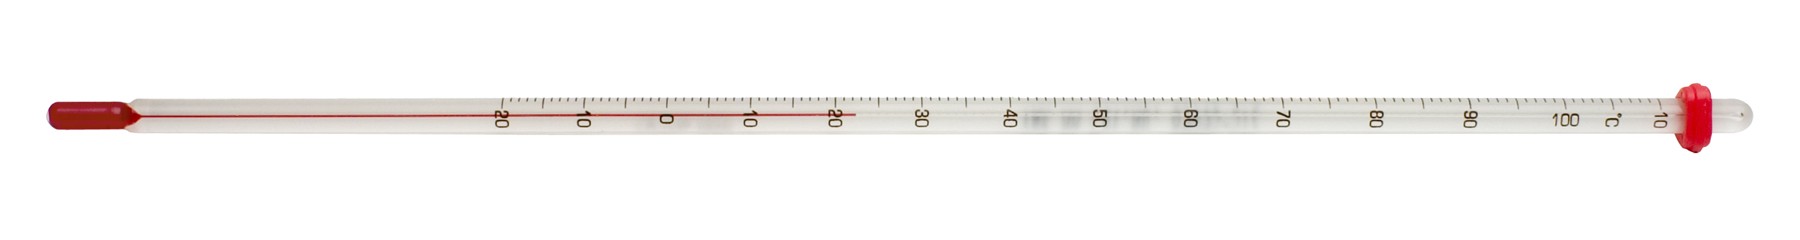 SP Bel-Art, H-B DURAC General Purpose Liquid-In-Glass Laboratory Thermometer; -20 to 150C, 76mm Immersion, Organic Liquid Fill